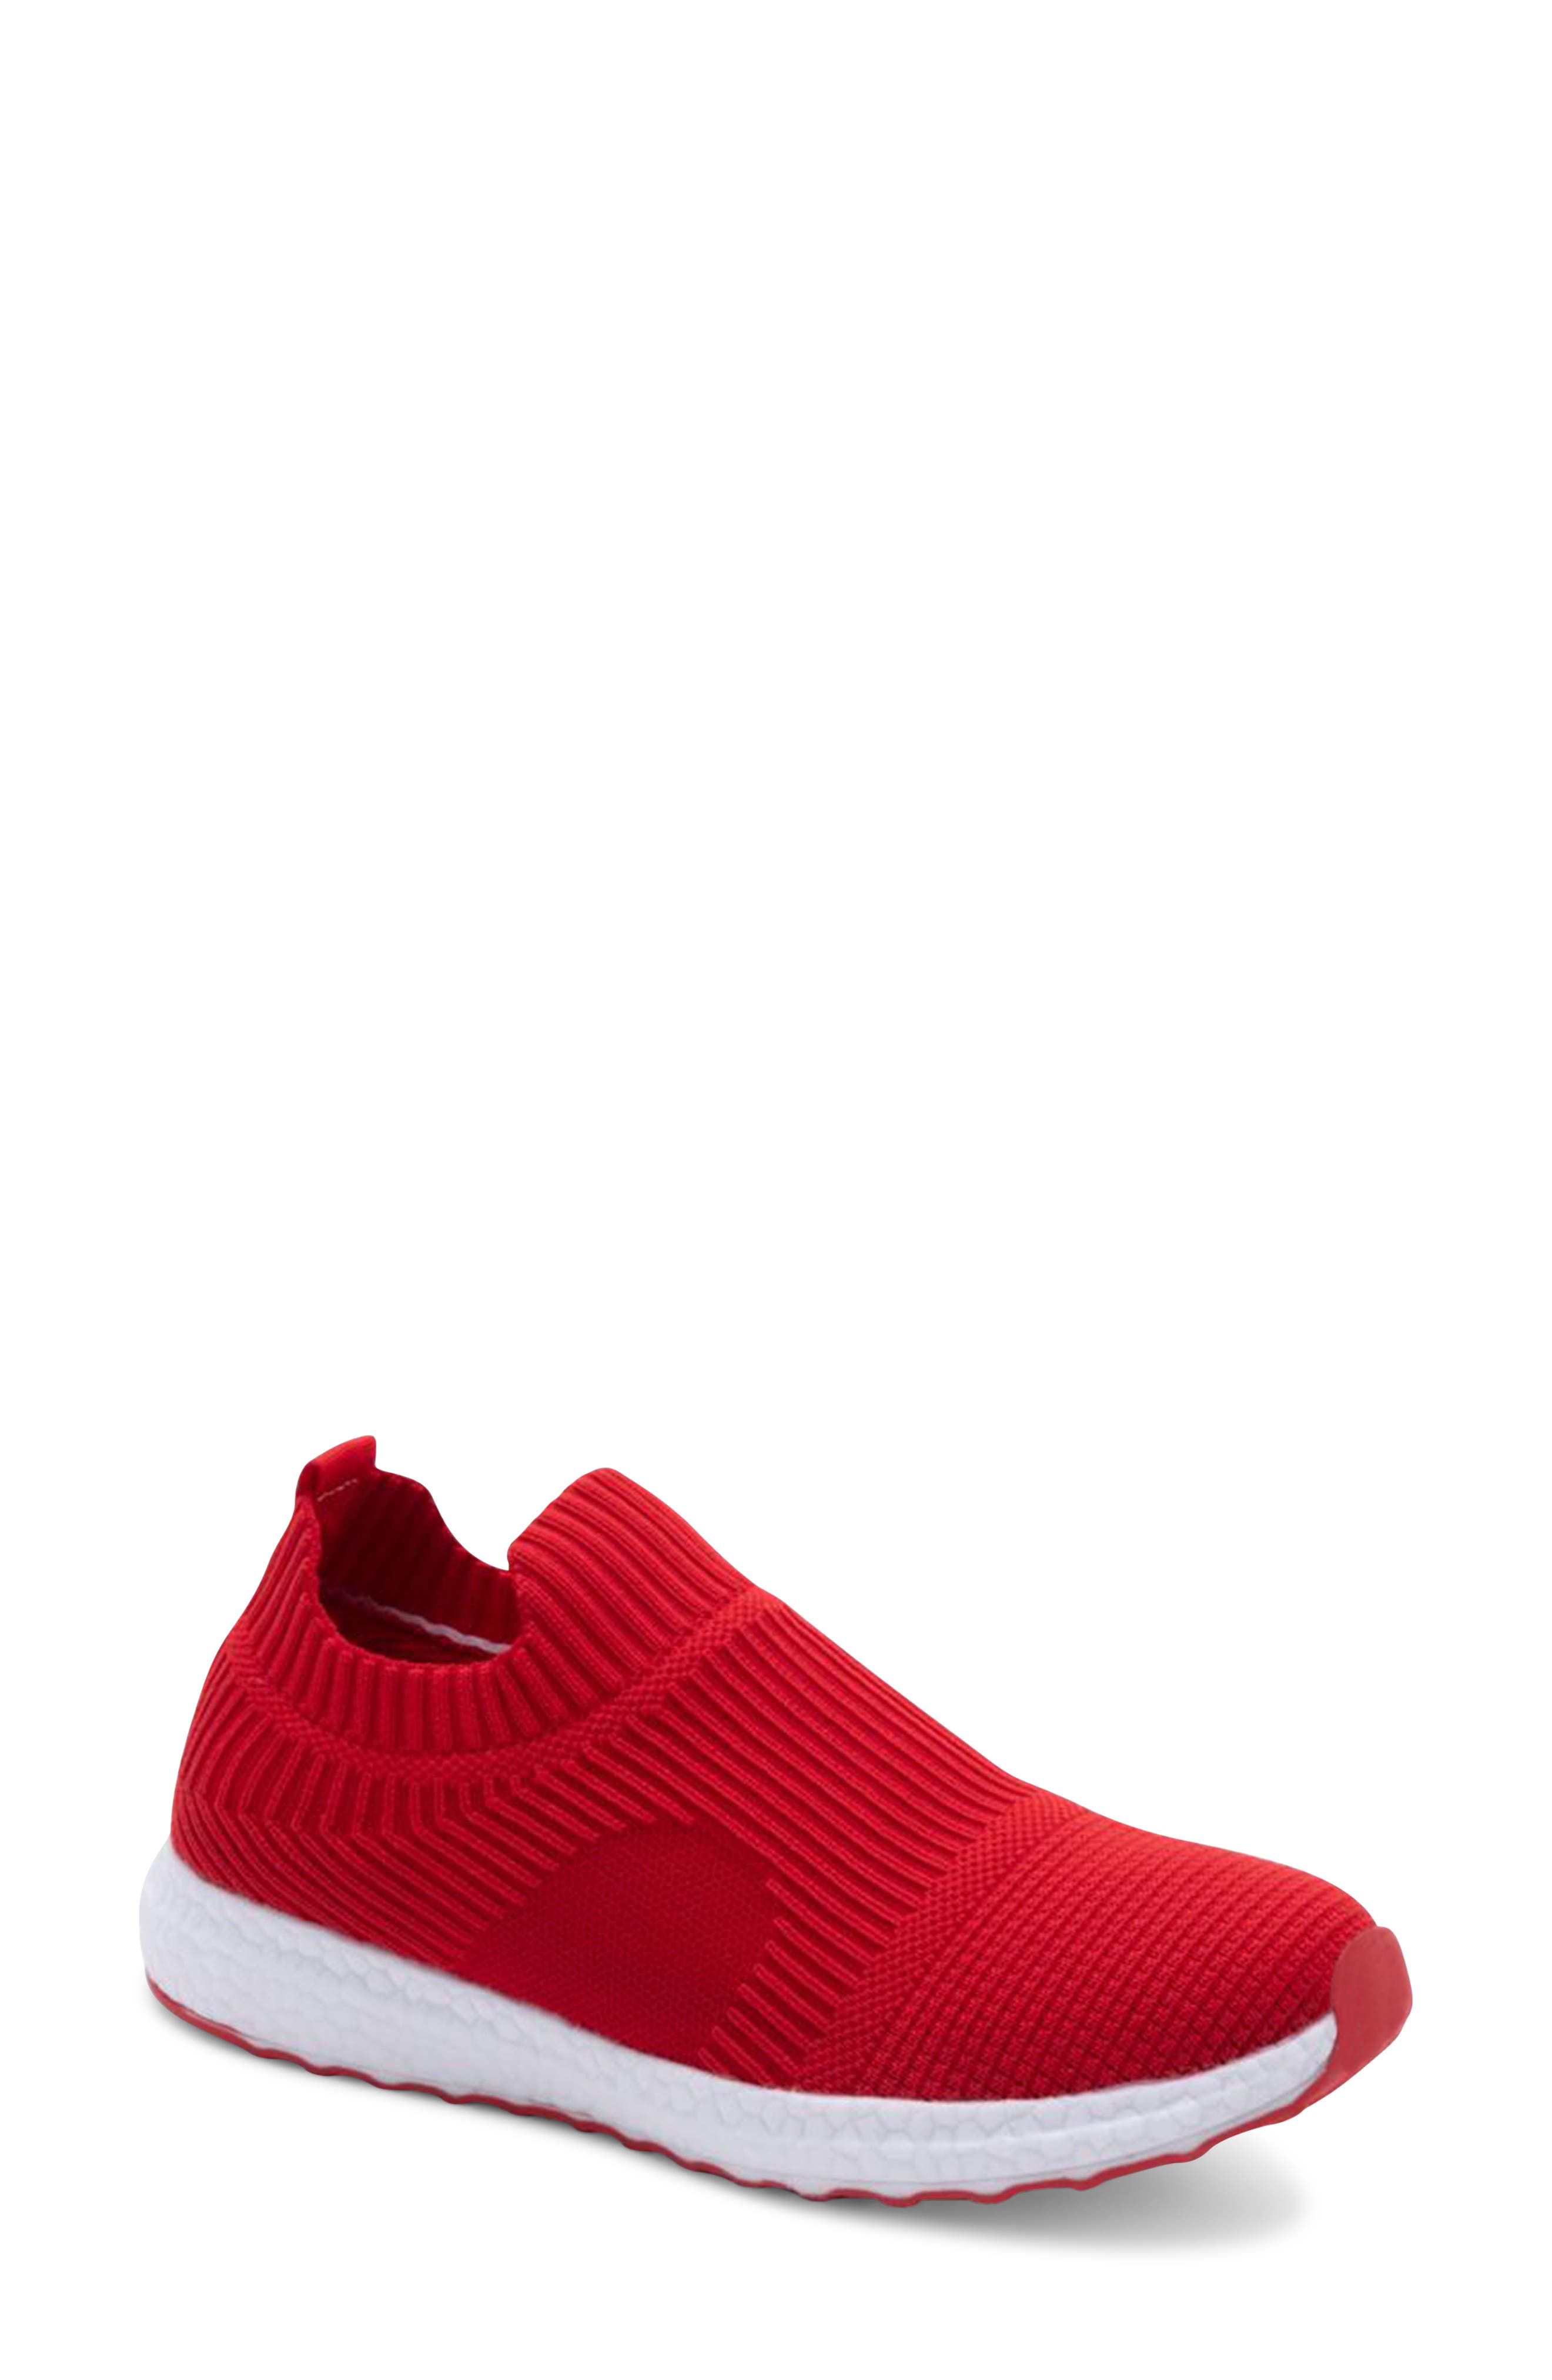 women's red slip on sneakers